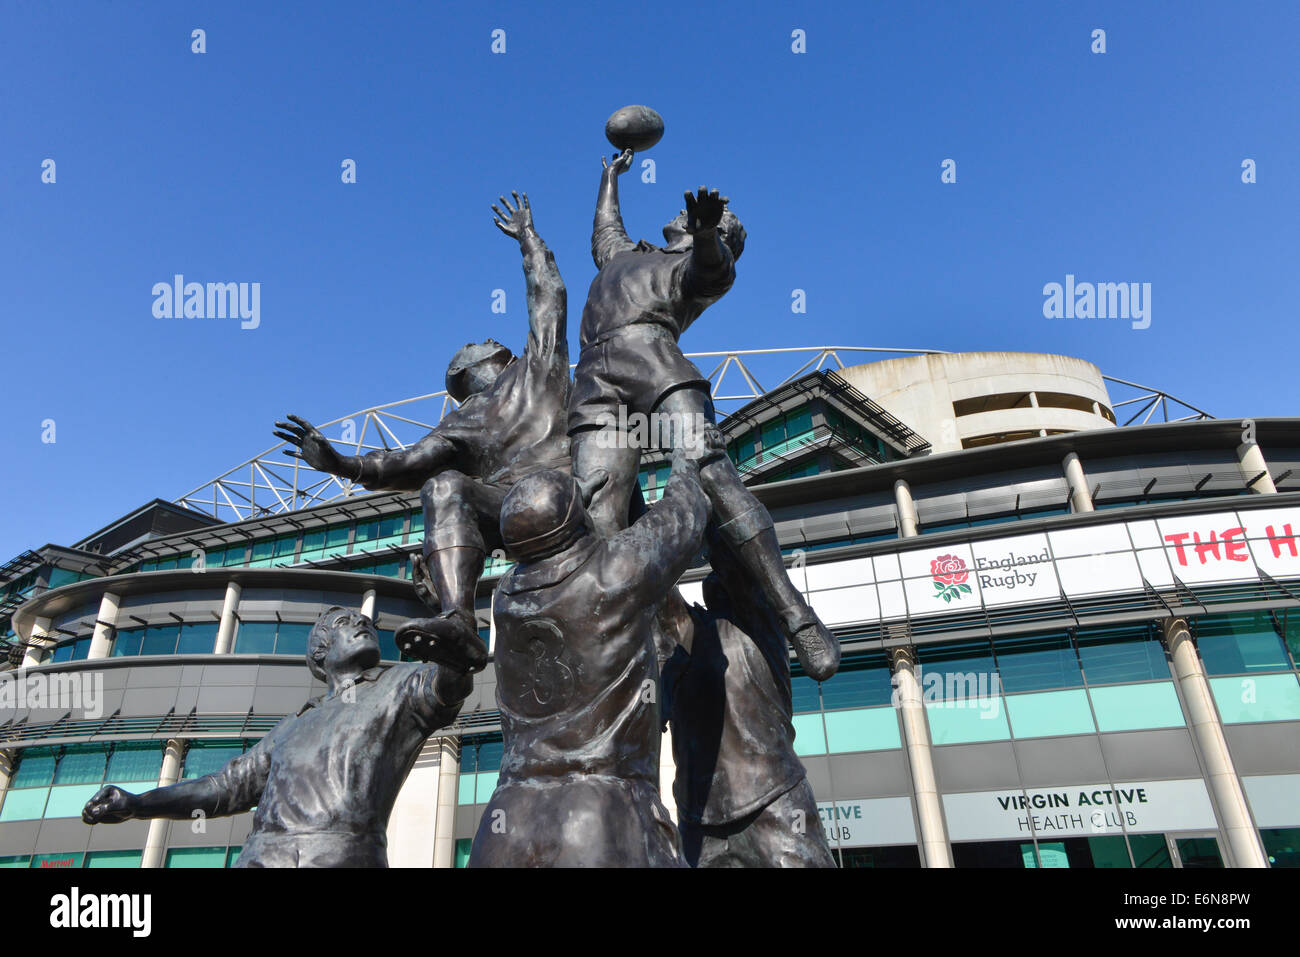 Twickenham rugby stadium rugby players statue Stock Photo